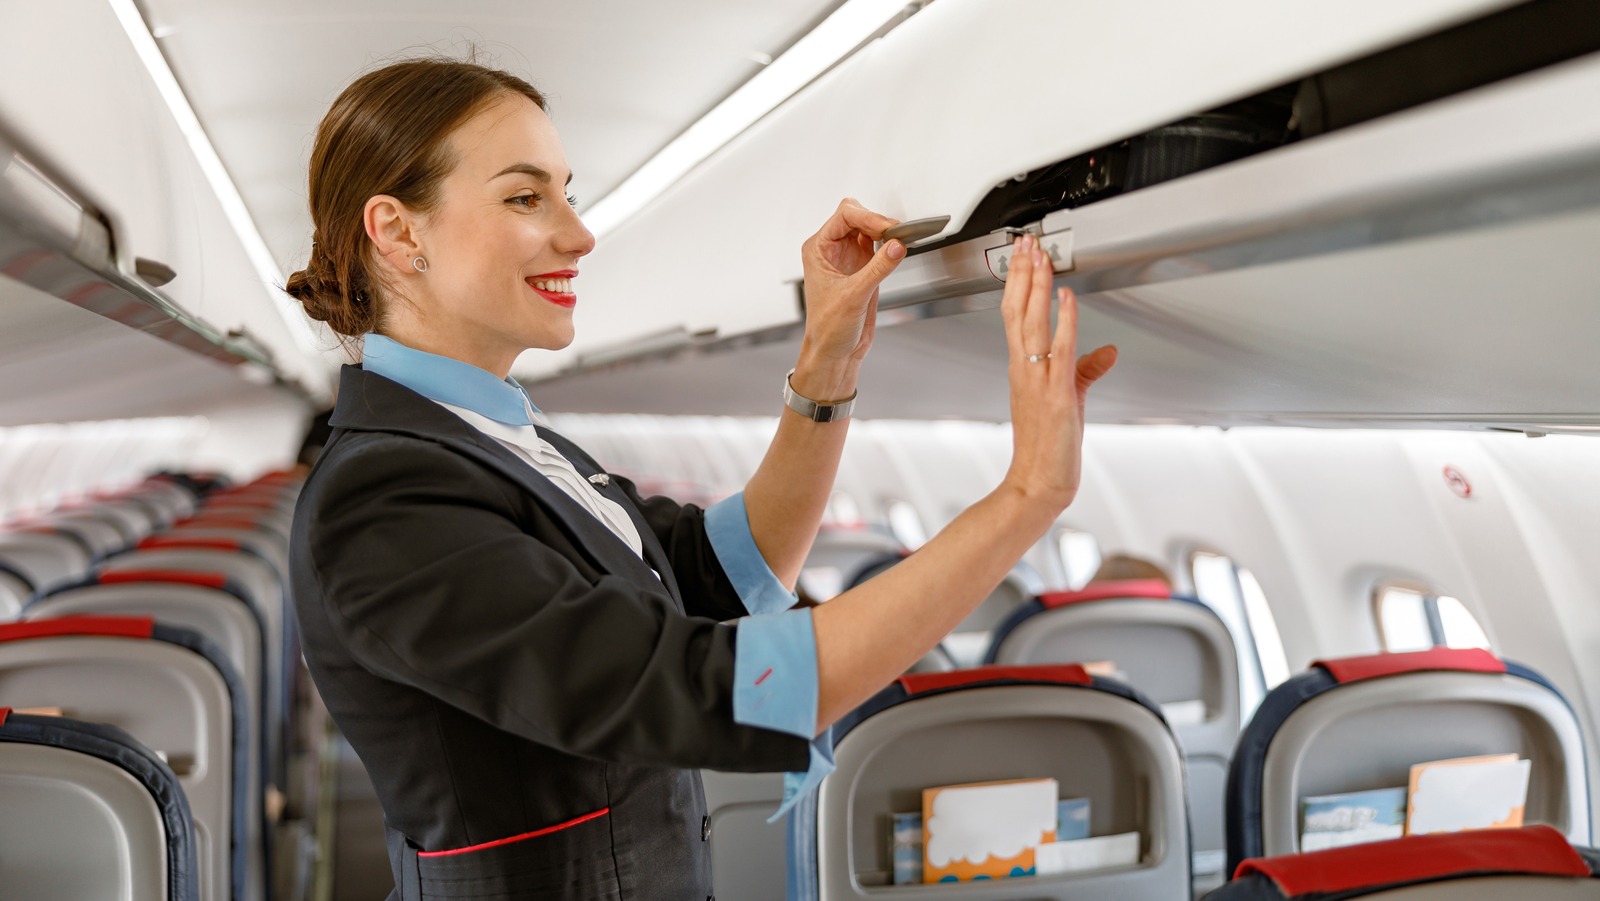 personal presentation of a flight attendant